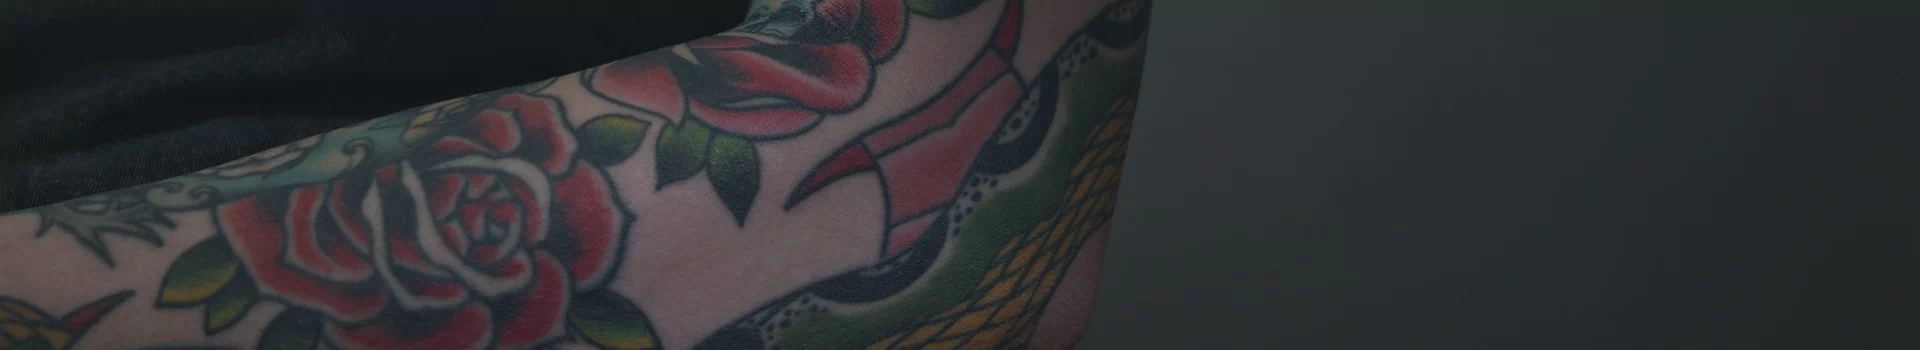 tatuaż